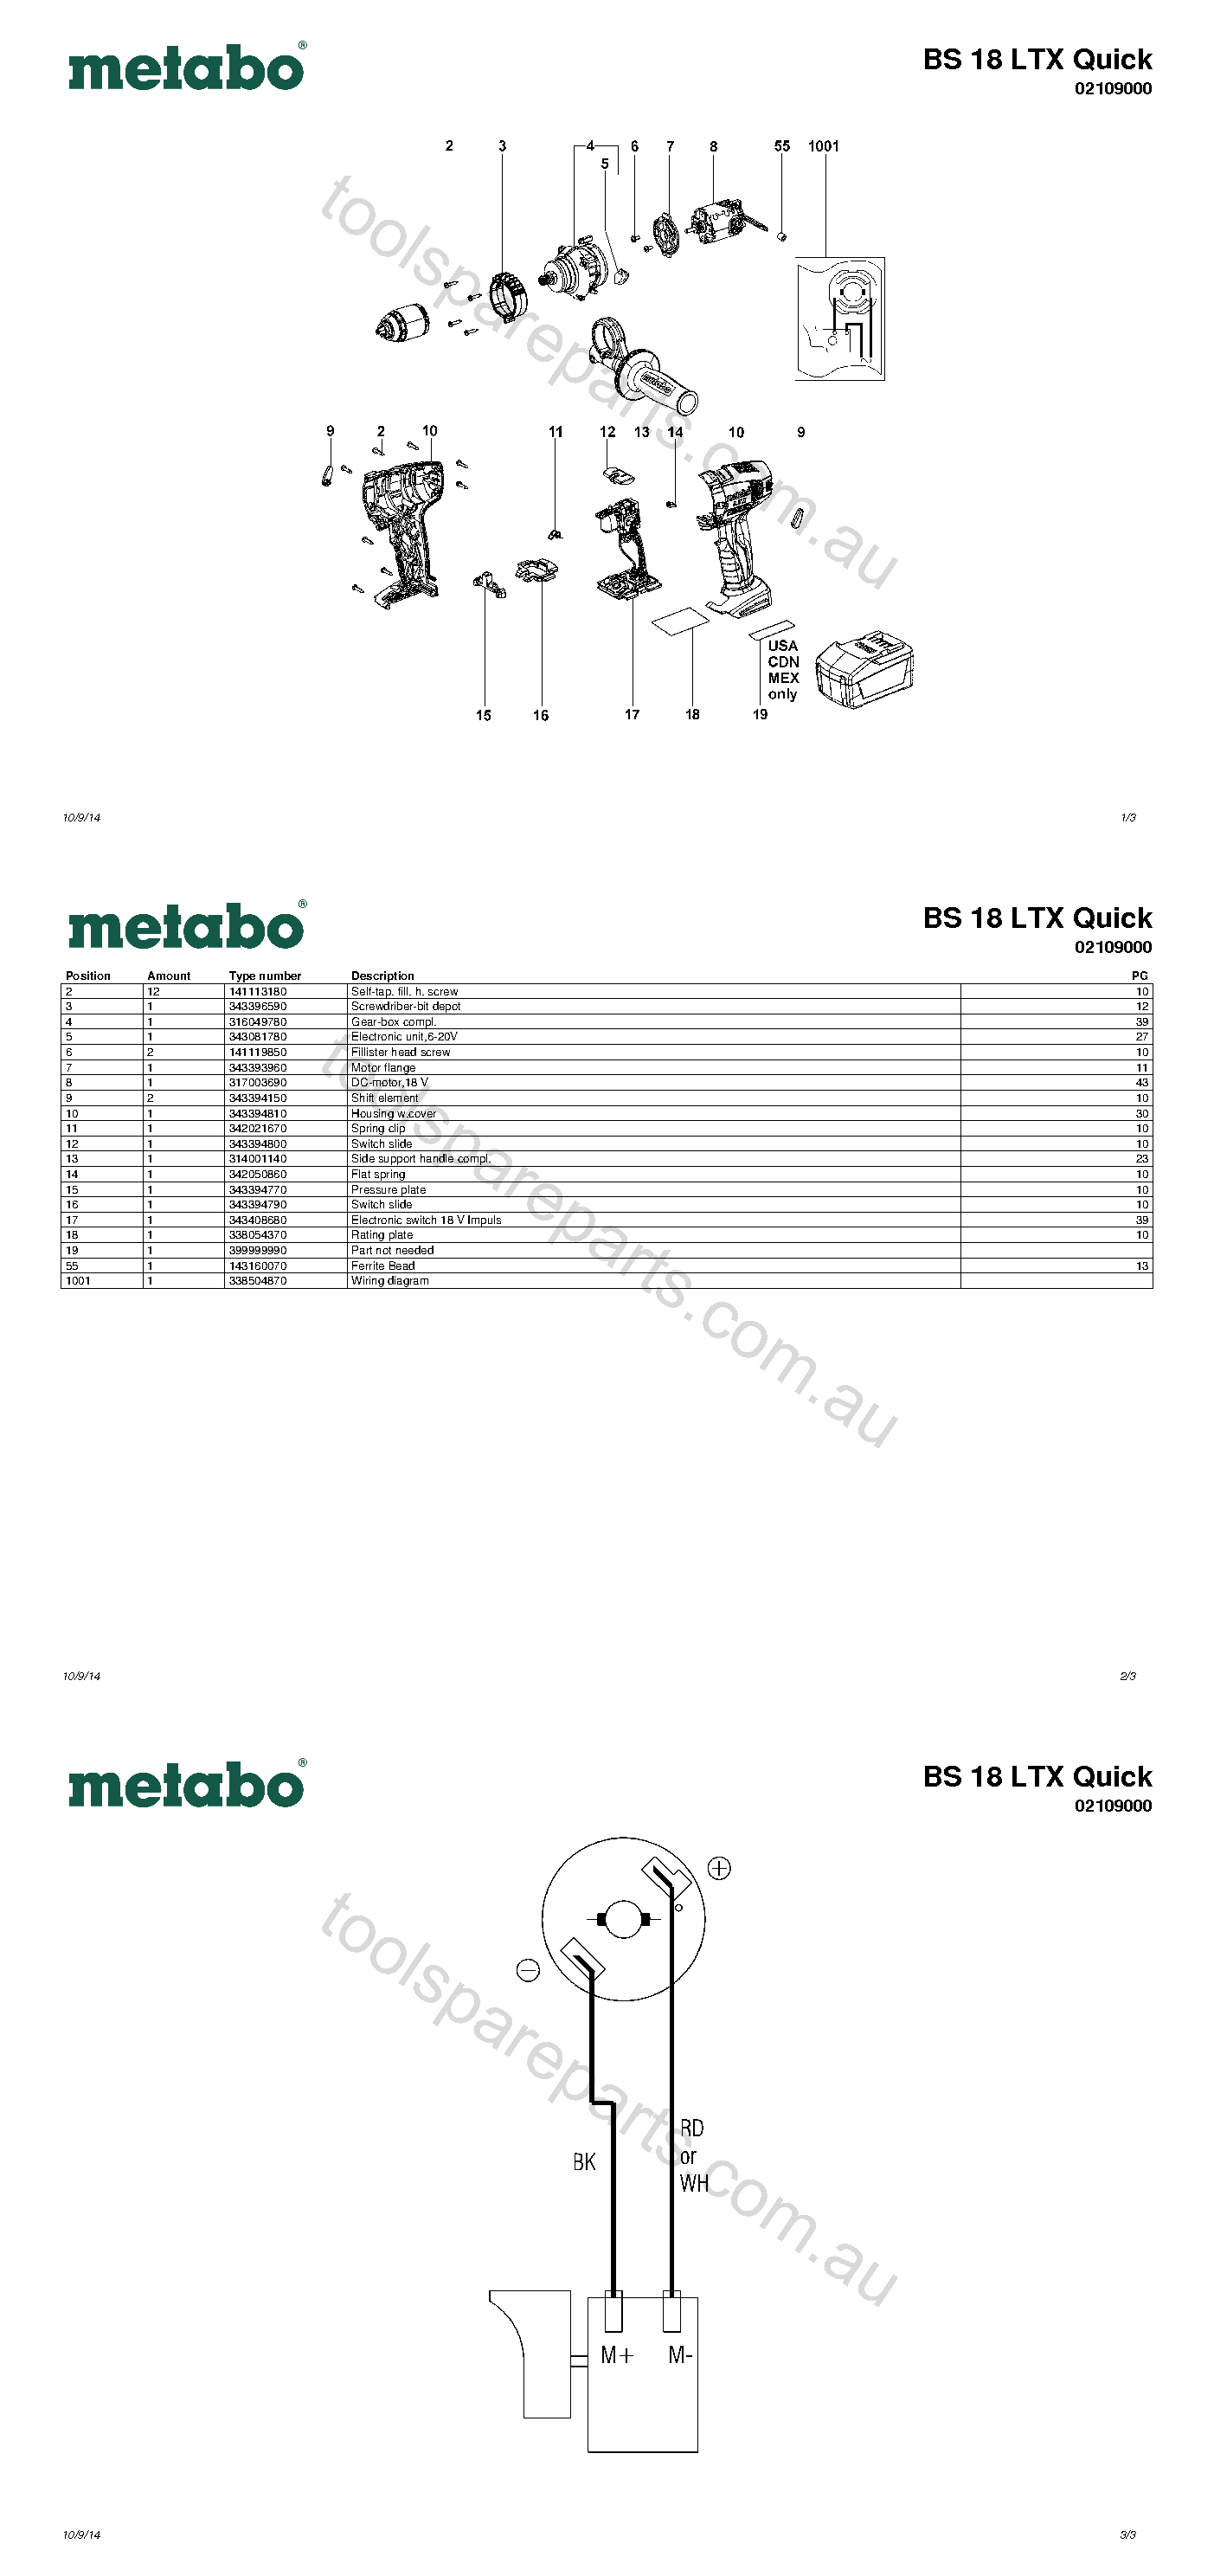 Metabo BS 18 LTX Quick 02109000  Diagram 1